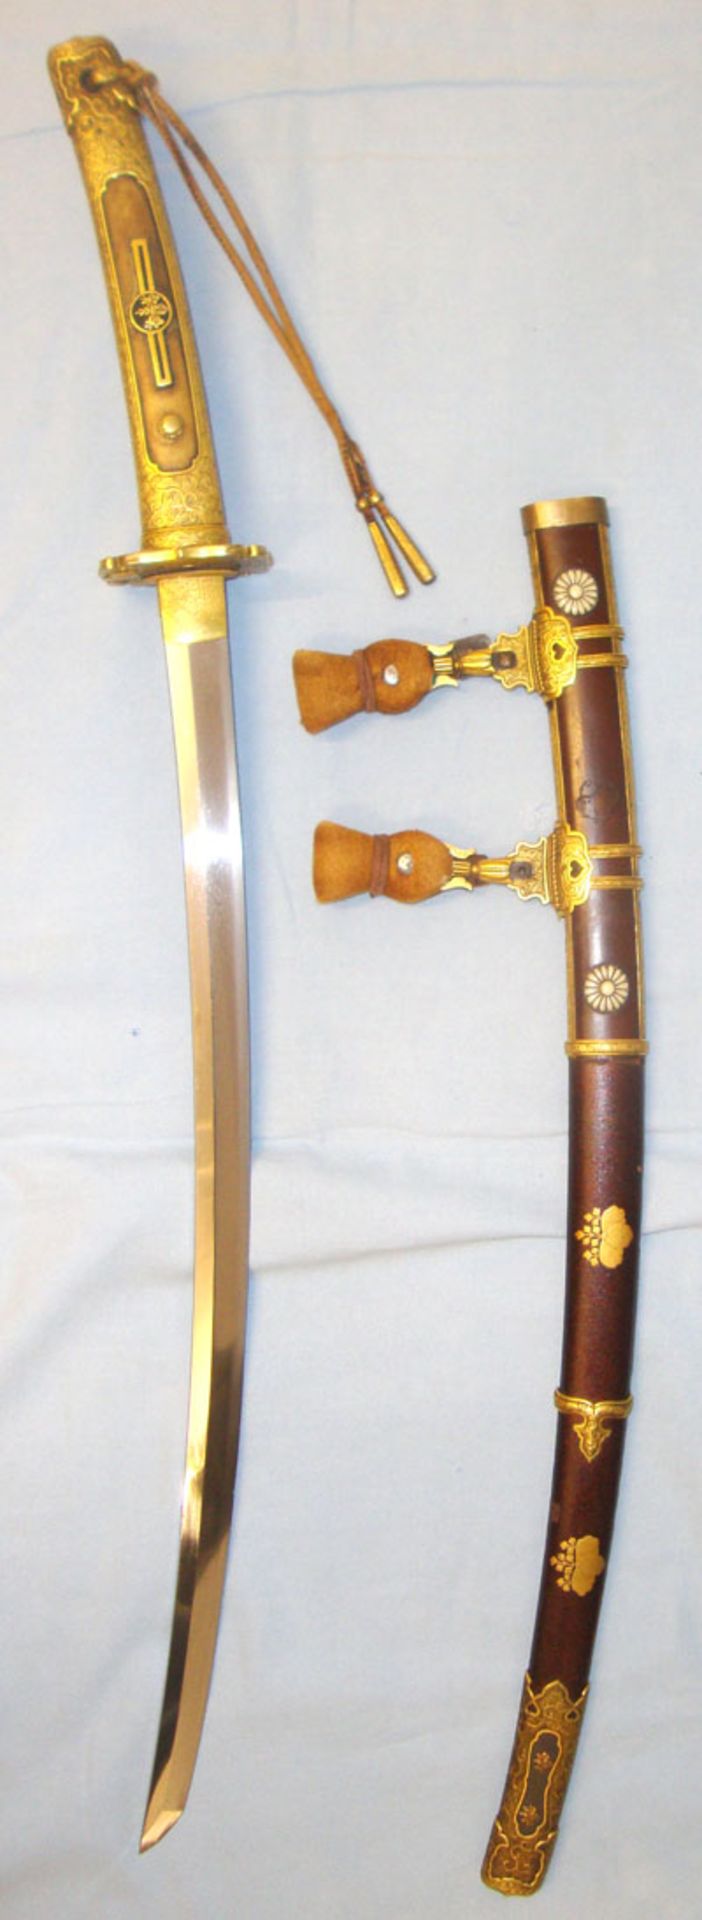 ANCIENT BLADE 1390-1393 2nd Generation Kanezane Sword Smith Japanese Blade Mint Polish (New Images) - Image 4 of 11